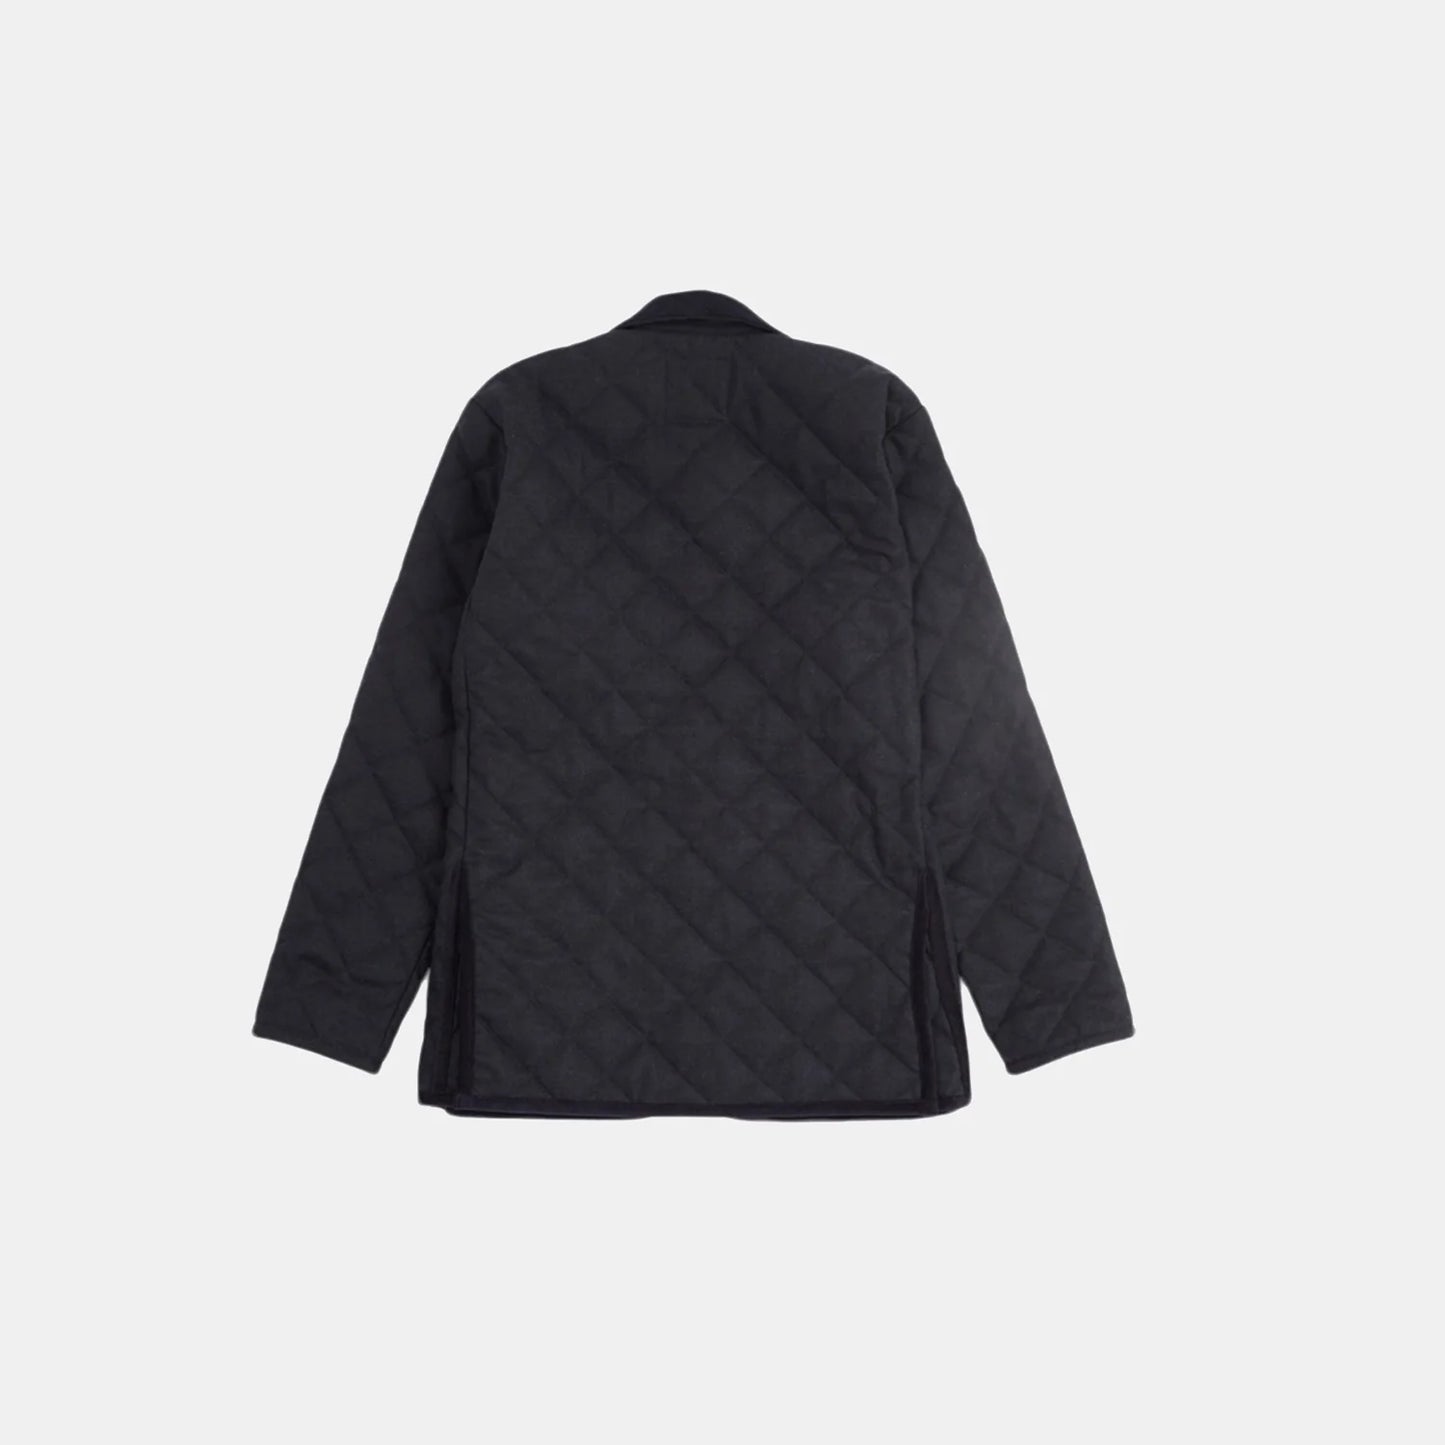 LVH DENHAM Wool Mix Quilted Jacket Charcoal